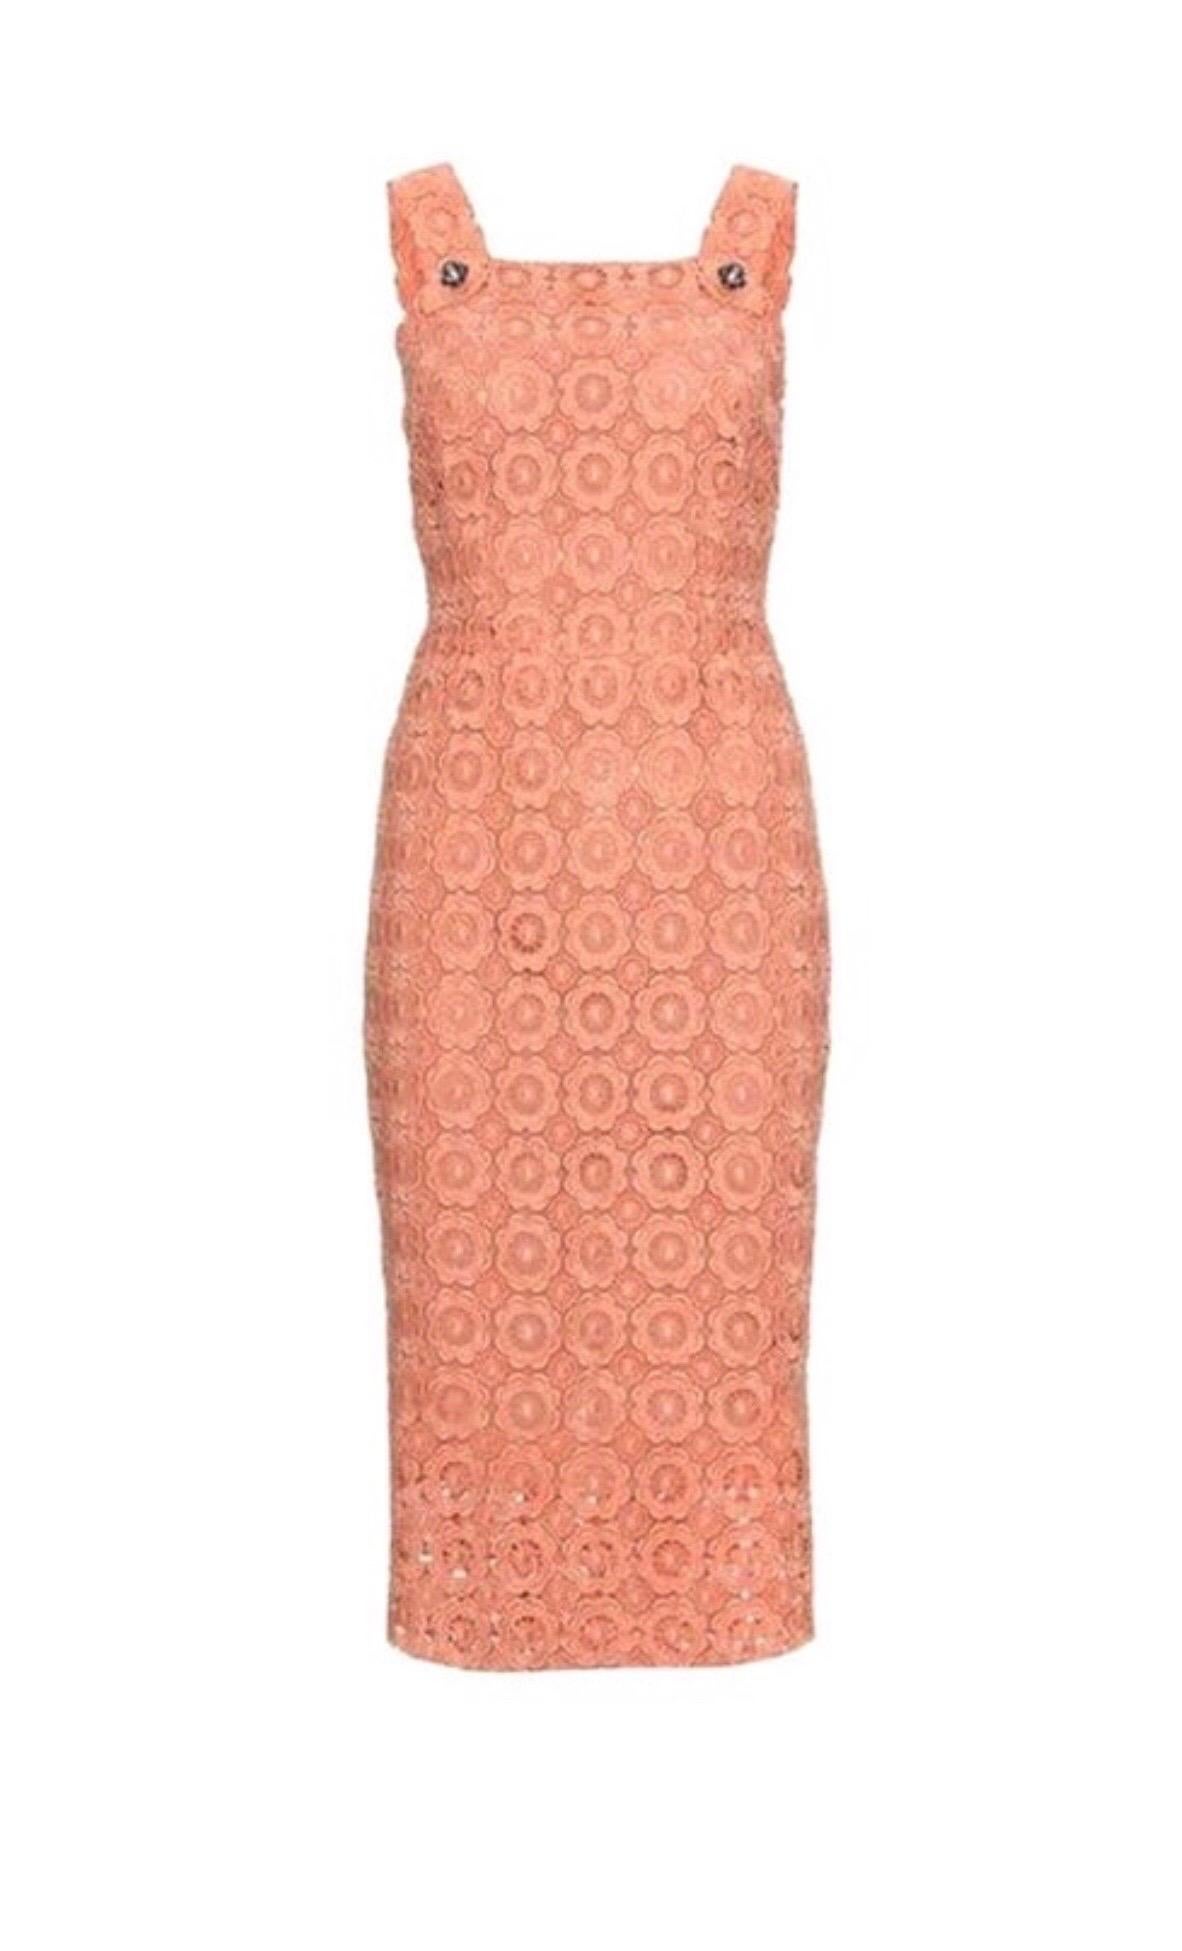 Orange Stunning Dolce & Gabbana Coral Eyelet Shift Dress with Jeweled Button Details